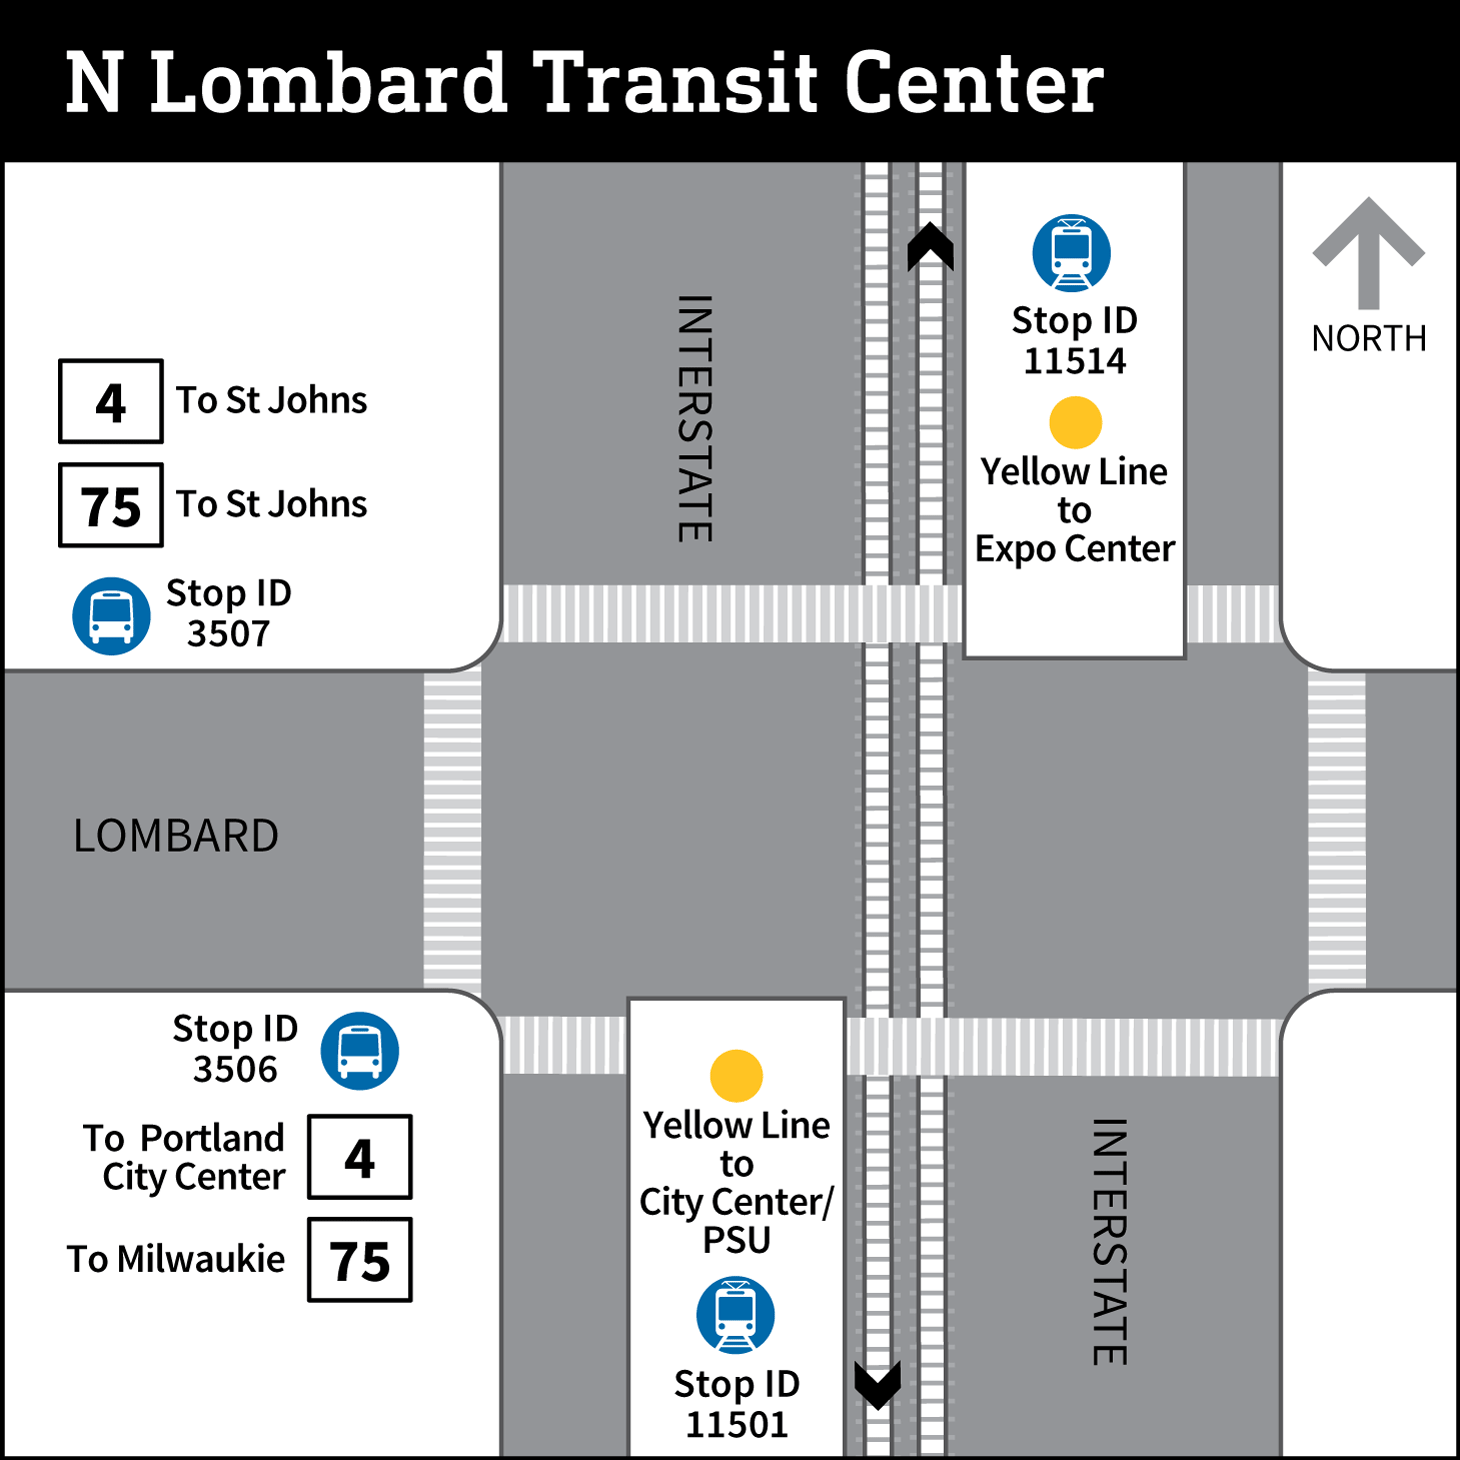 N Lombard Transit Center